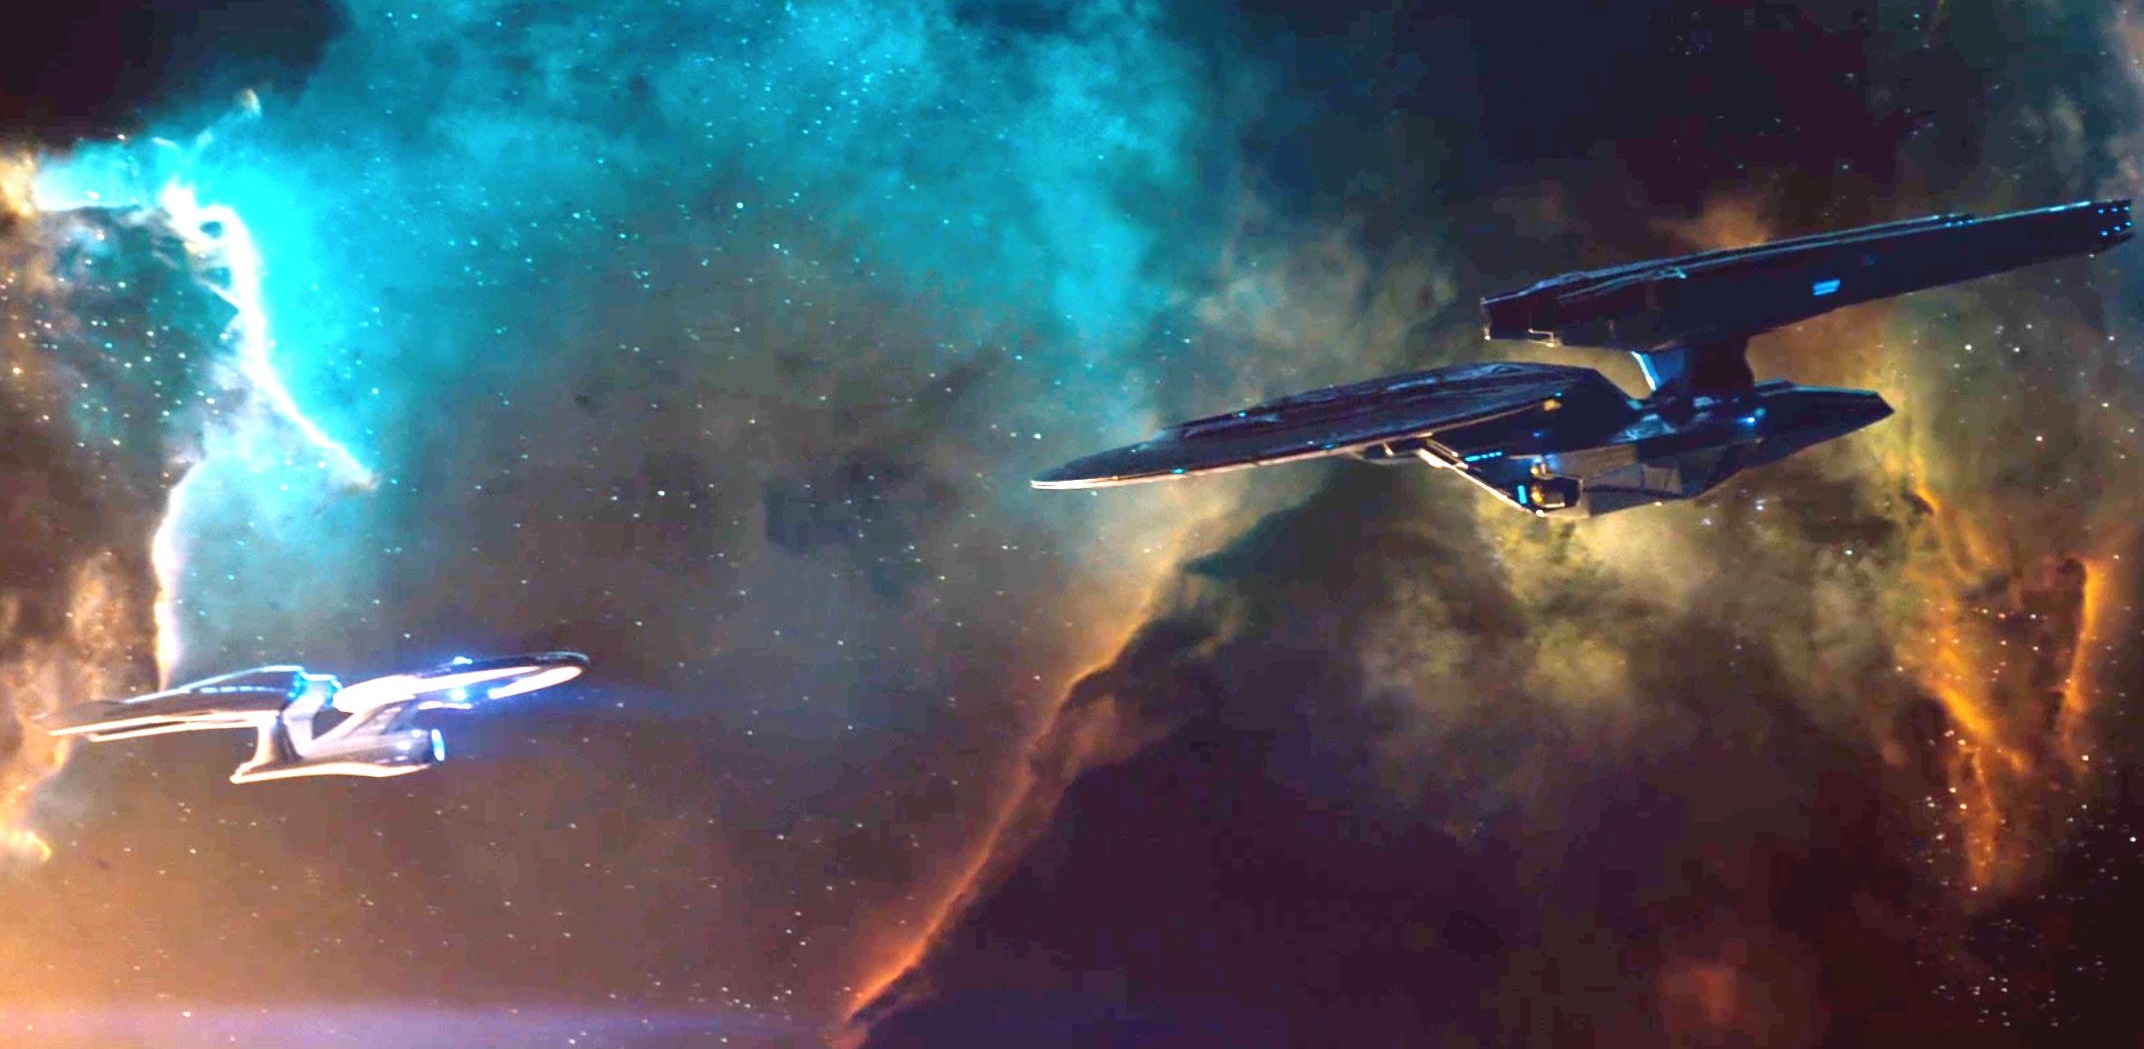 Orci odchdza z reisrskej stoliky tretieho Star Treku